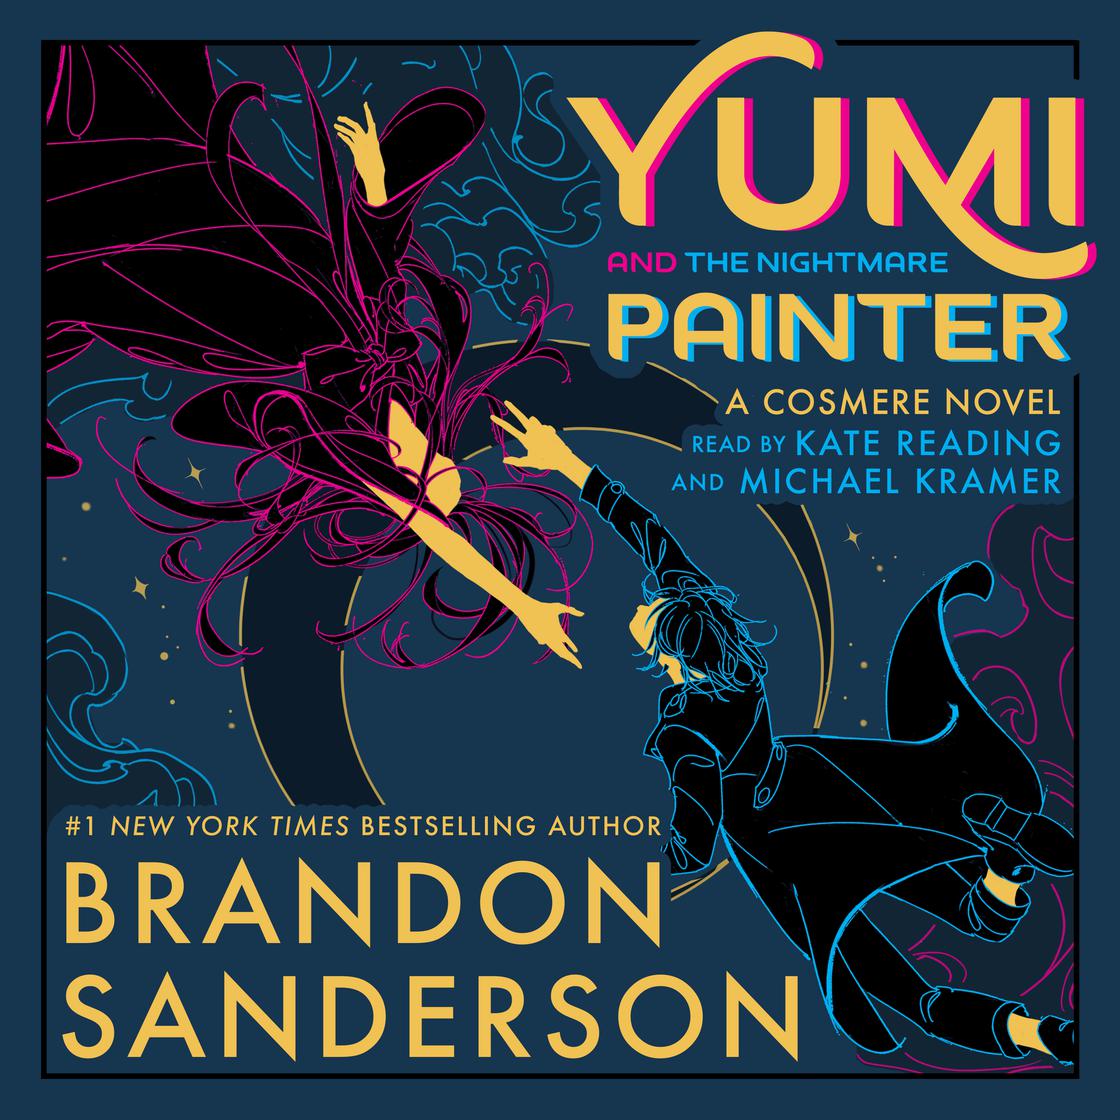 Brandon Sanderson: Yumi and the Nightmare Painter (AudiobookFormat)